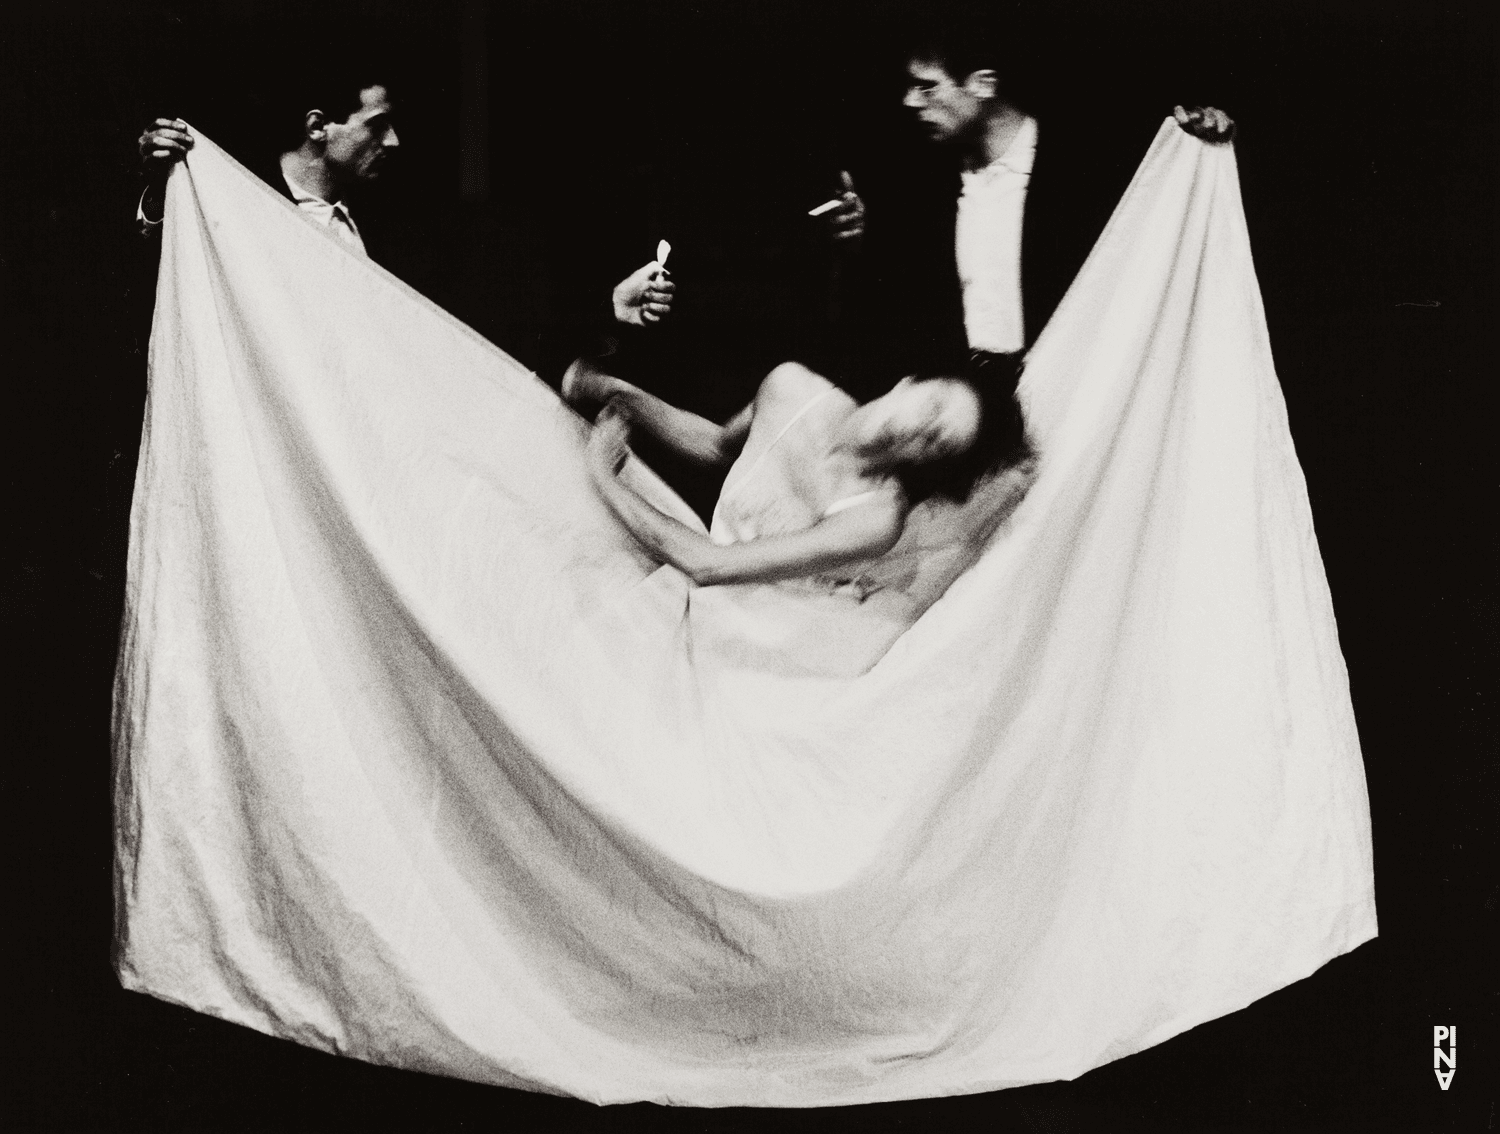 Antonio Carallo, Ed Kortlandt and Anne Martin in “Viktor” by Pina Bausch